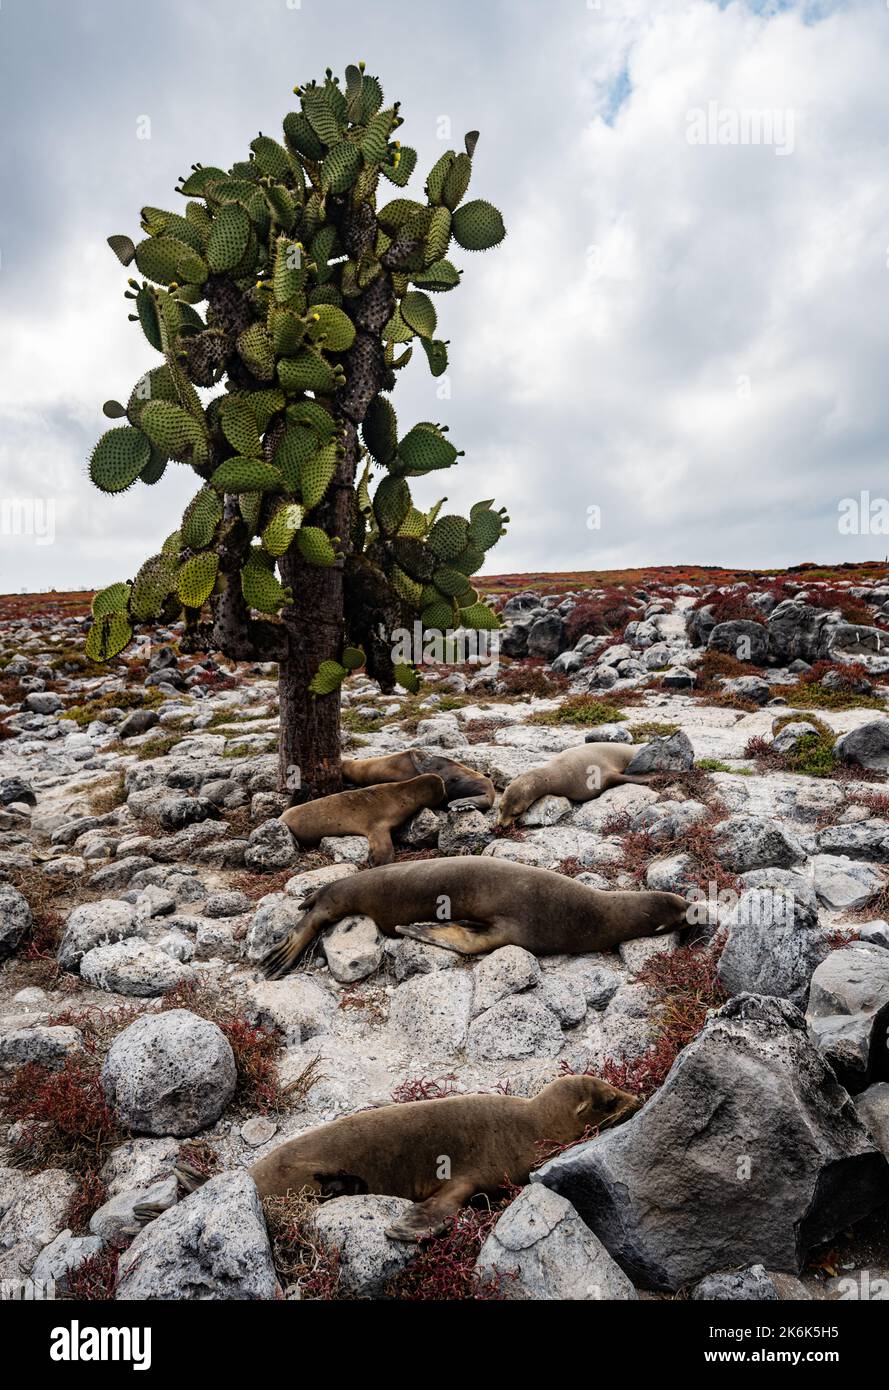 Sea Lions resting under a Prickly Pear Cactus tree, Opuntia echios, on Plaza island, Galapagos islands, Ecuador, South America Stock Photo